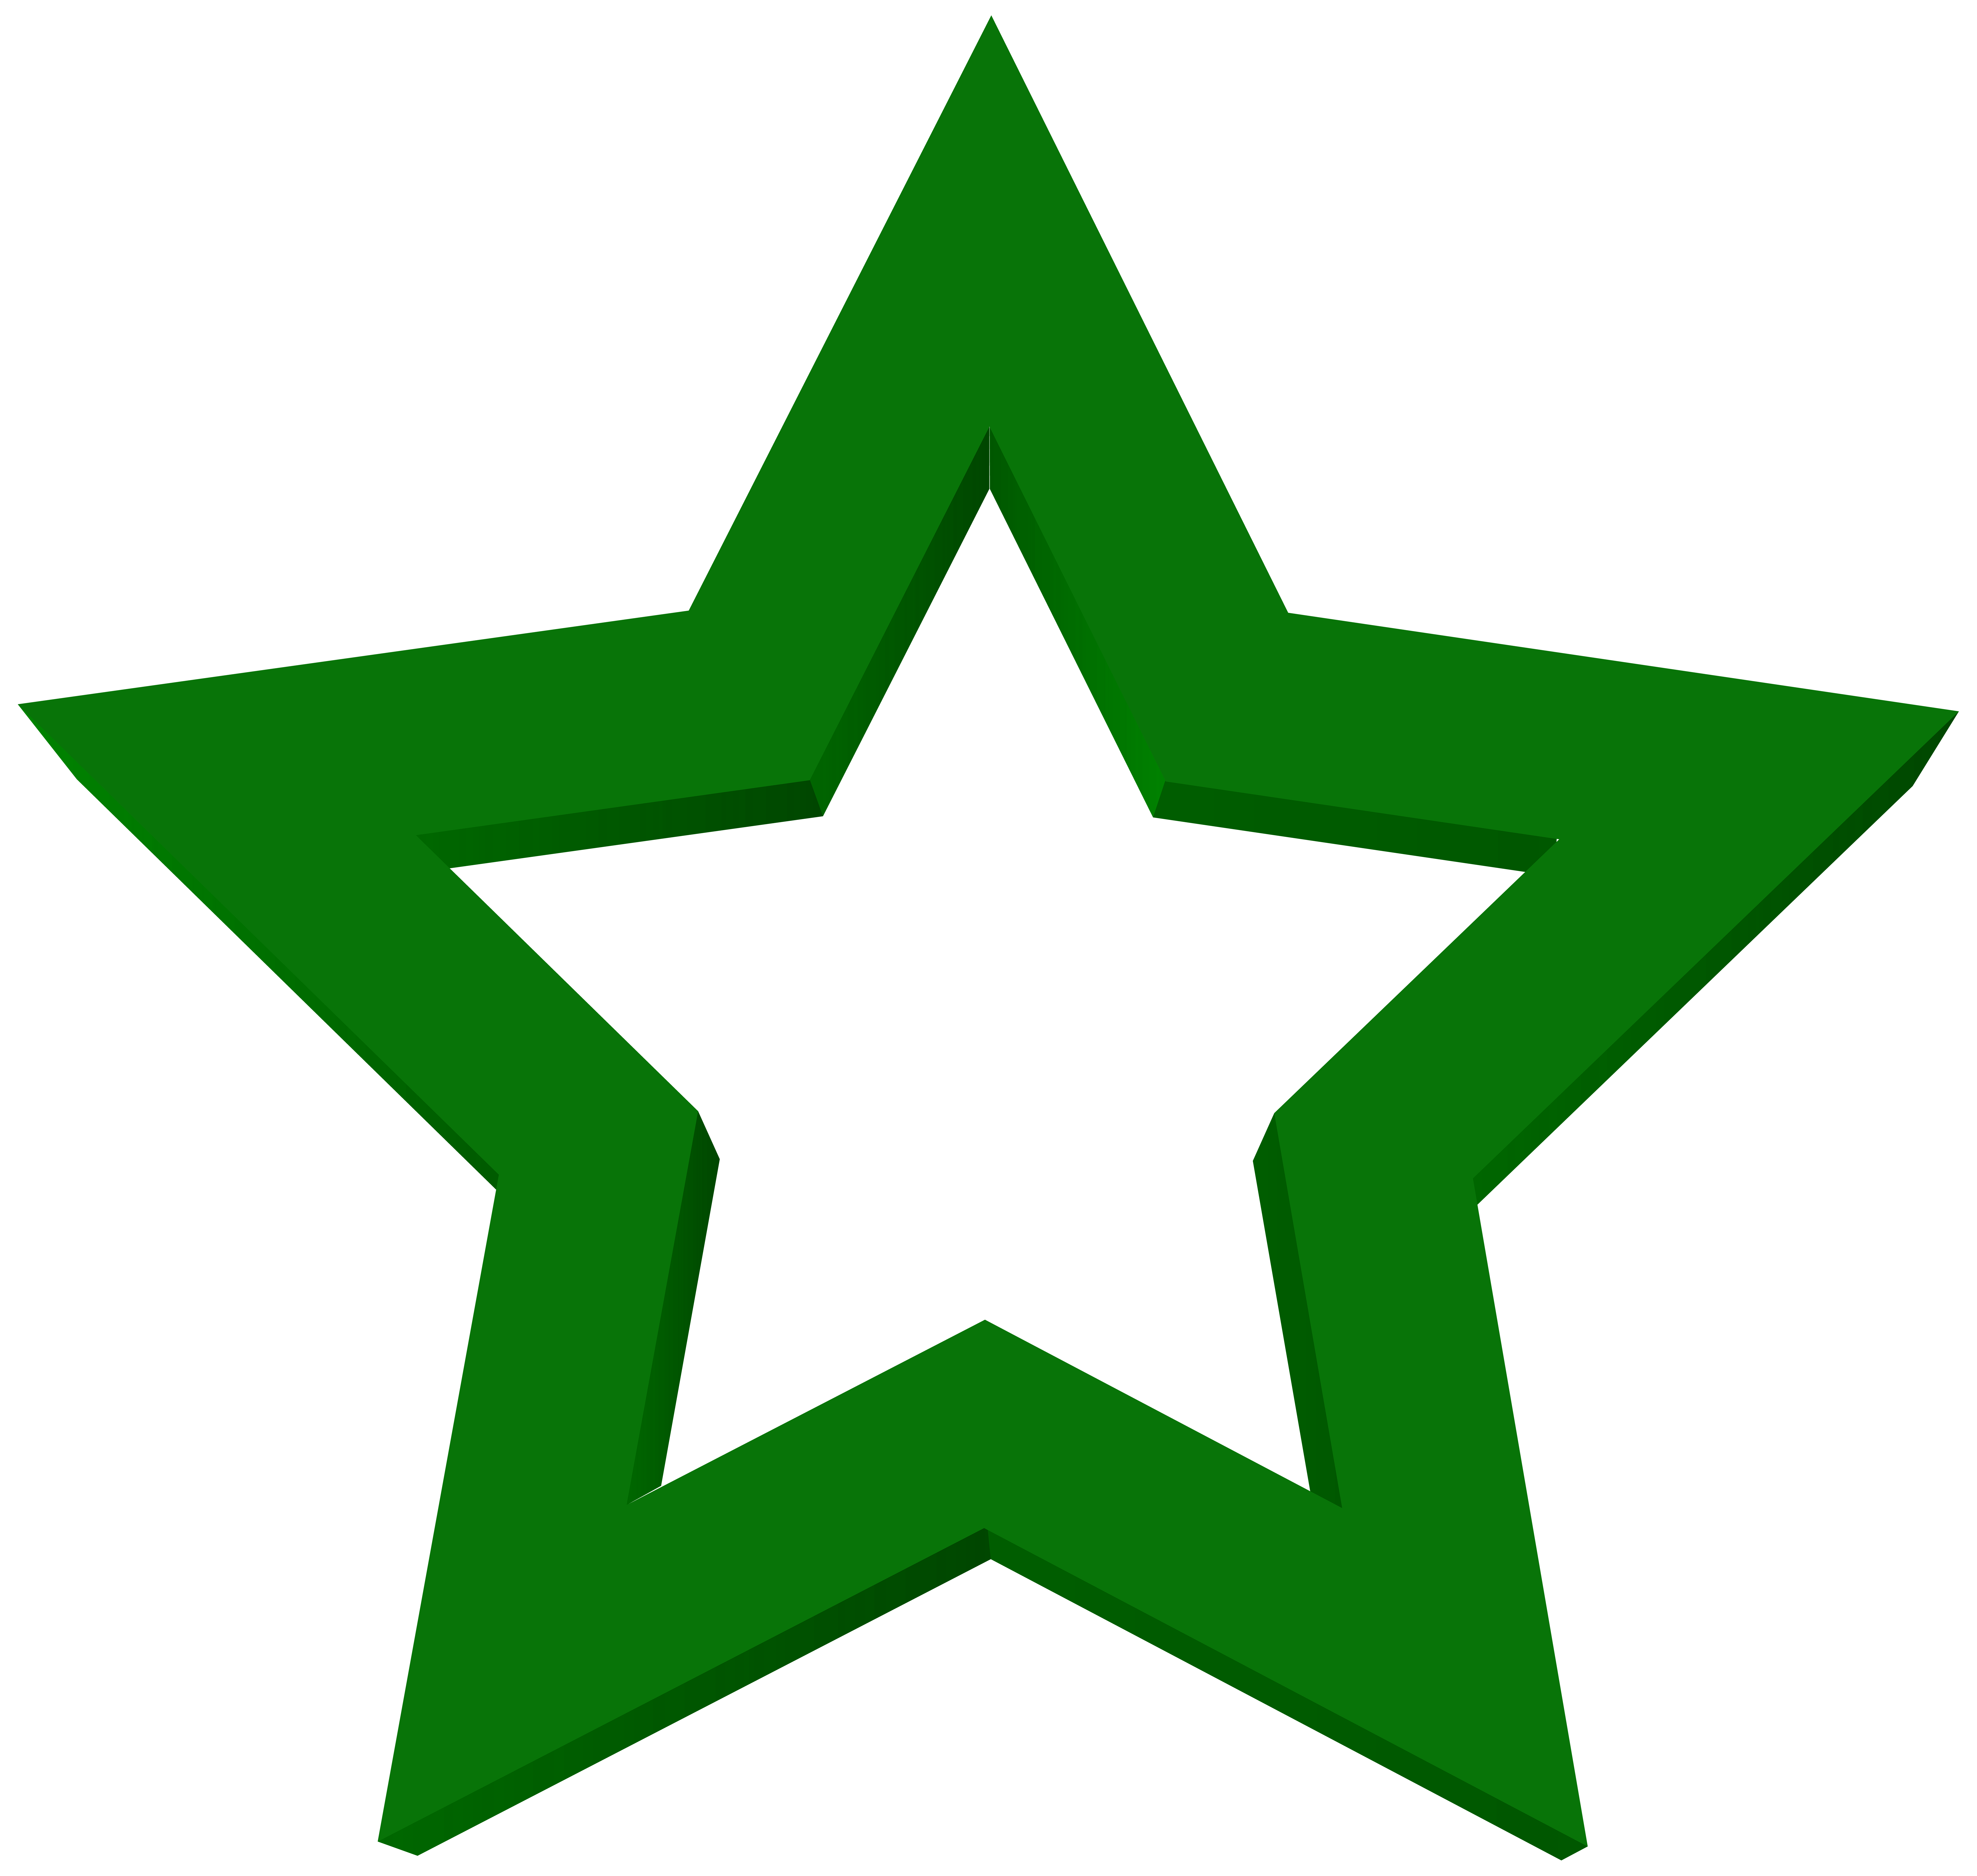 Transparent Green Star Clipart​